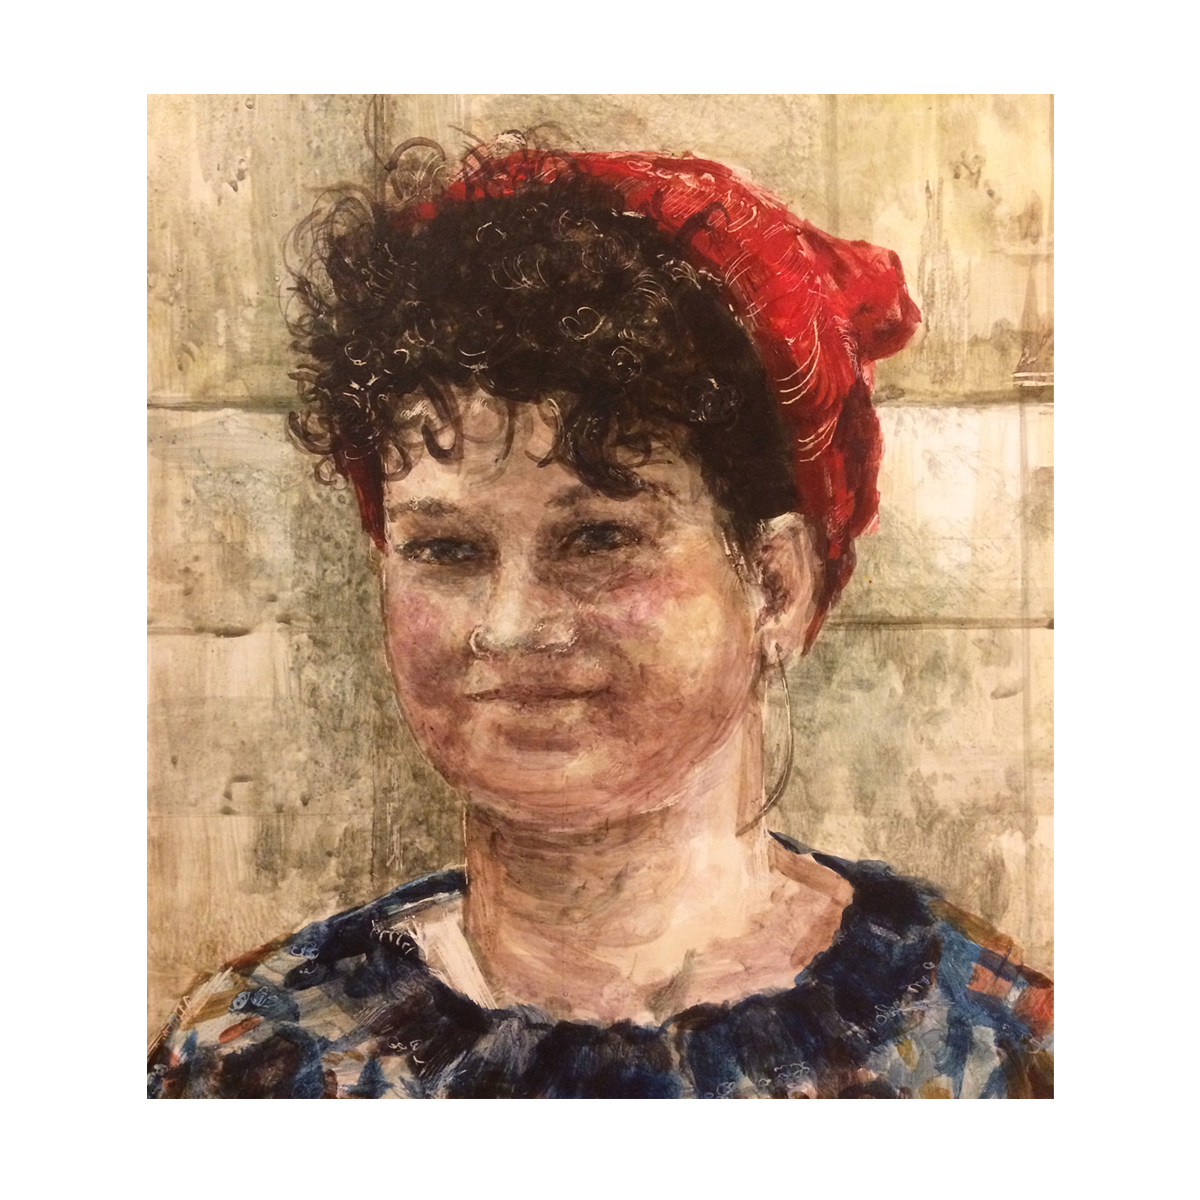 Toni Back Corbyn, 2019, Egg Tempera on wood panel, 30 x 30 cm